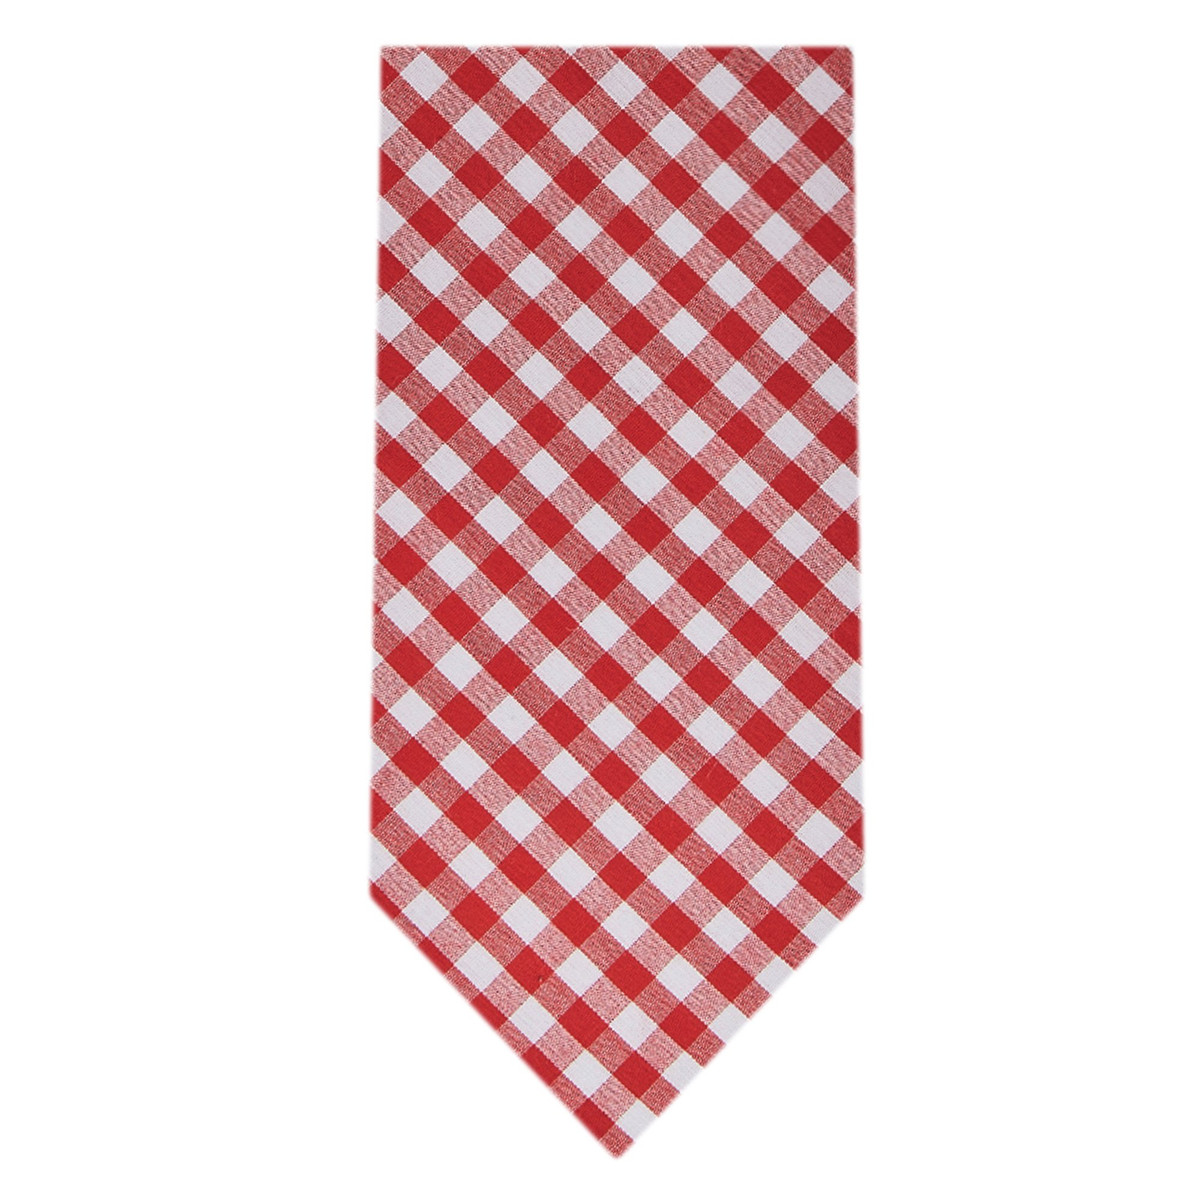 Men's Gingham Checkered Pattern Neck Tie - Red